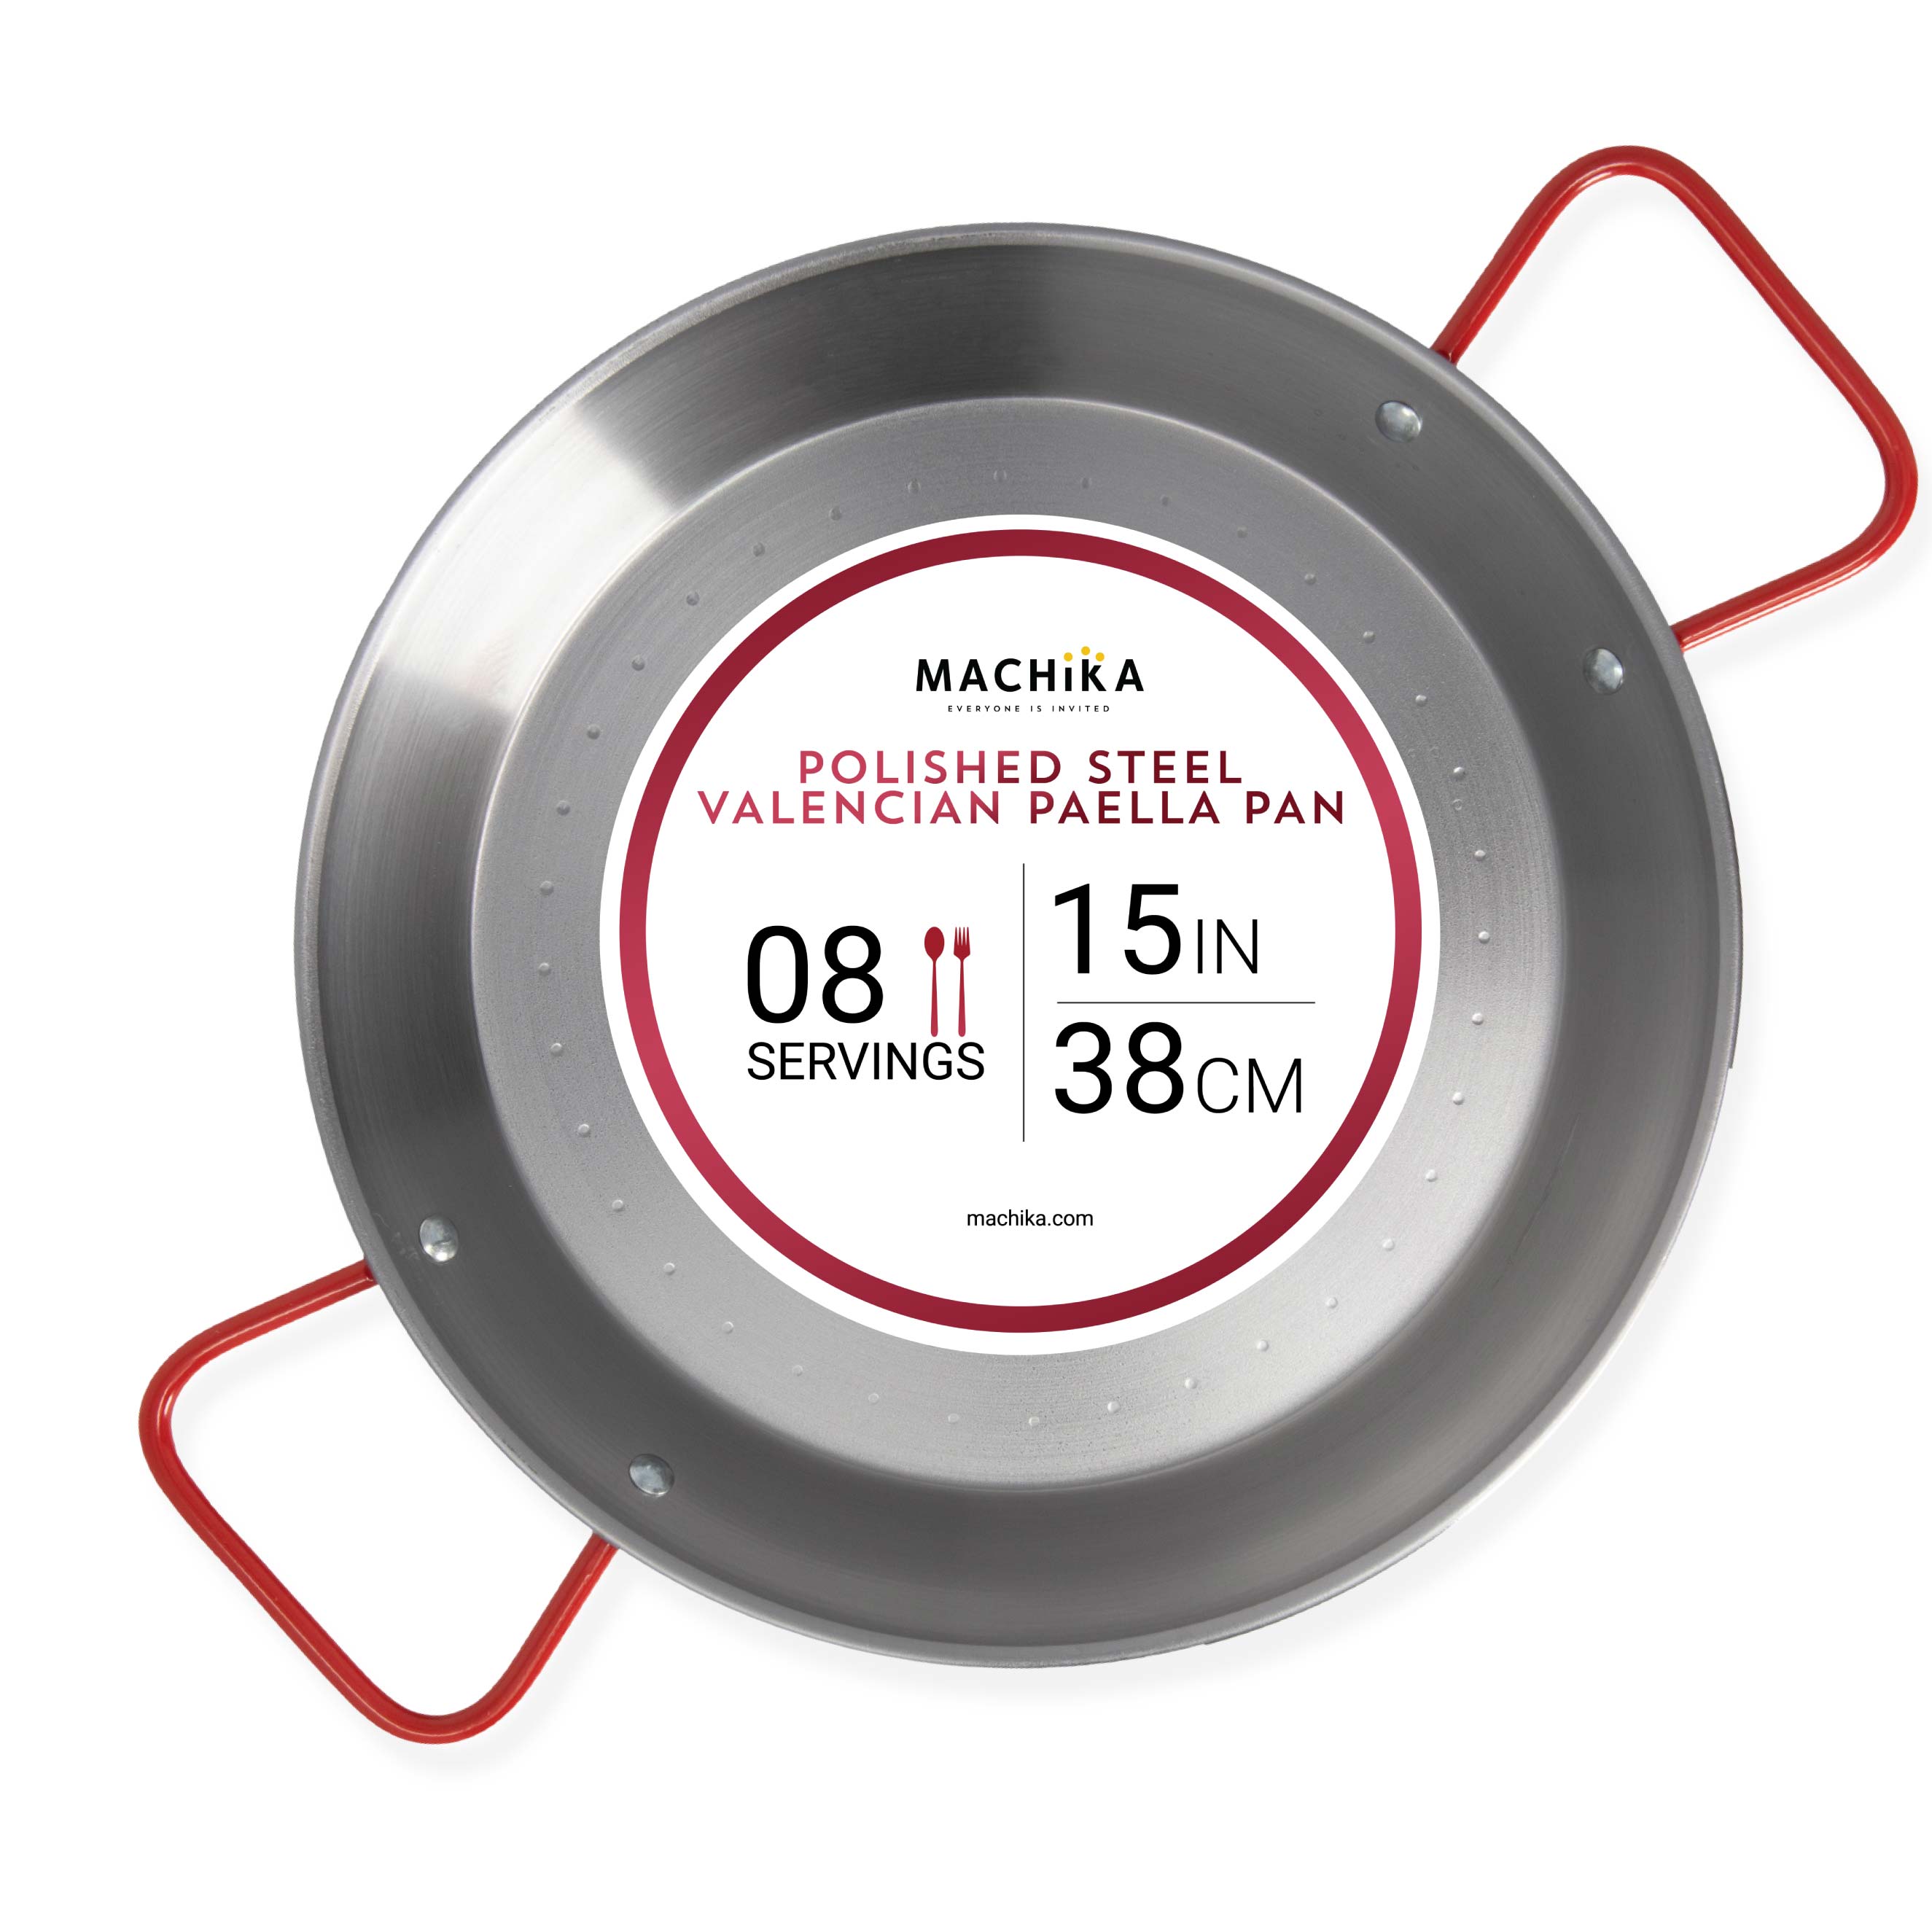 Machika Polished Steel Paella Pan for 8 Servings (15 inch